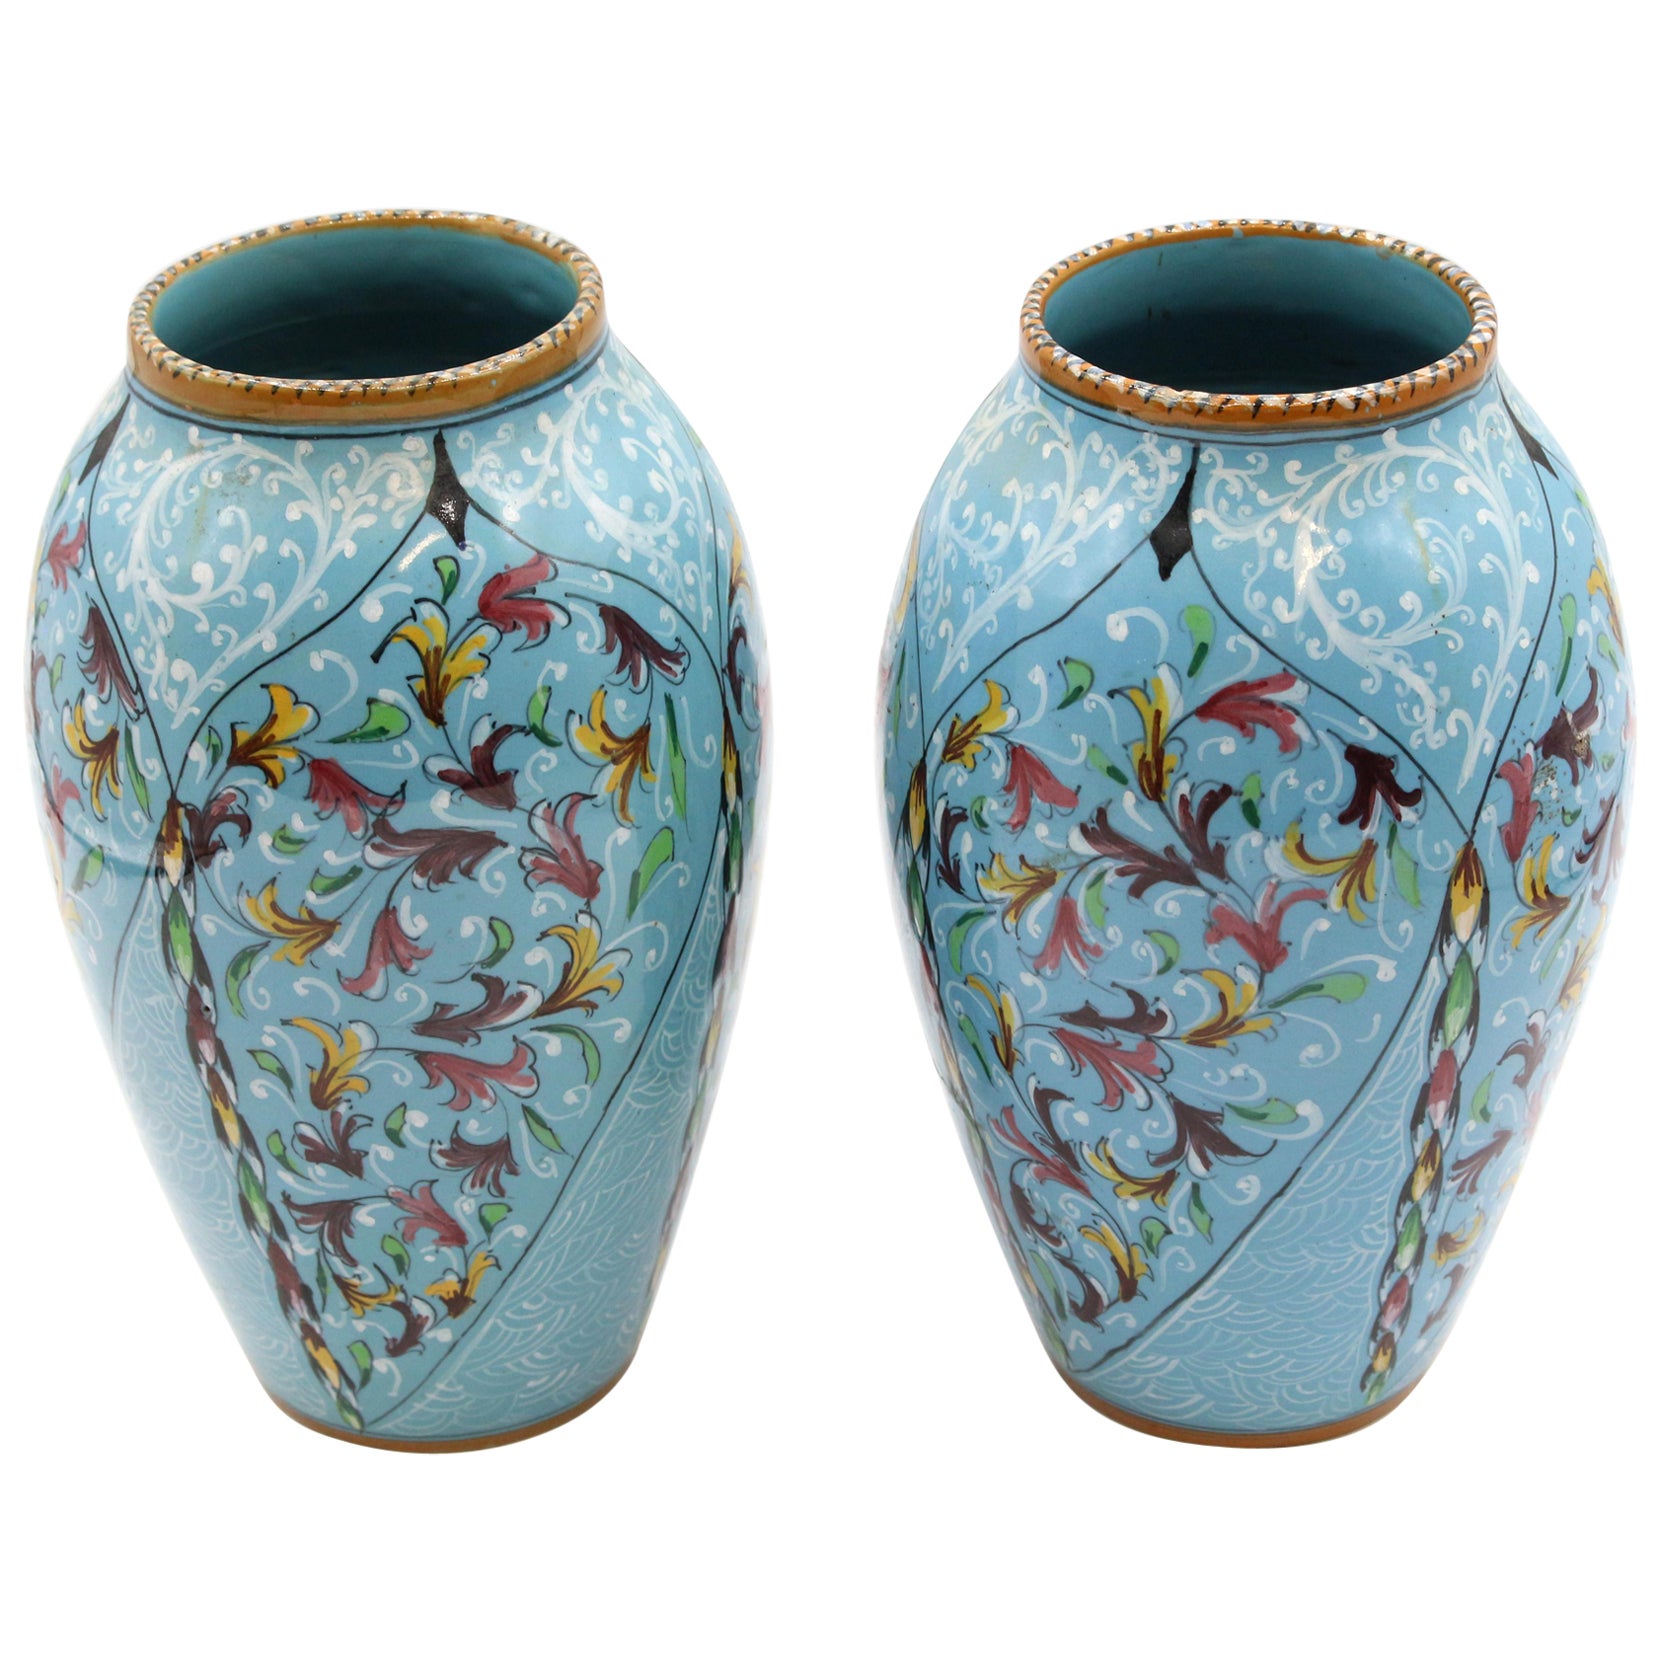 1900-1920s Pair of Italian Majolica Vases by Mengaroni For Sale